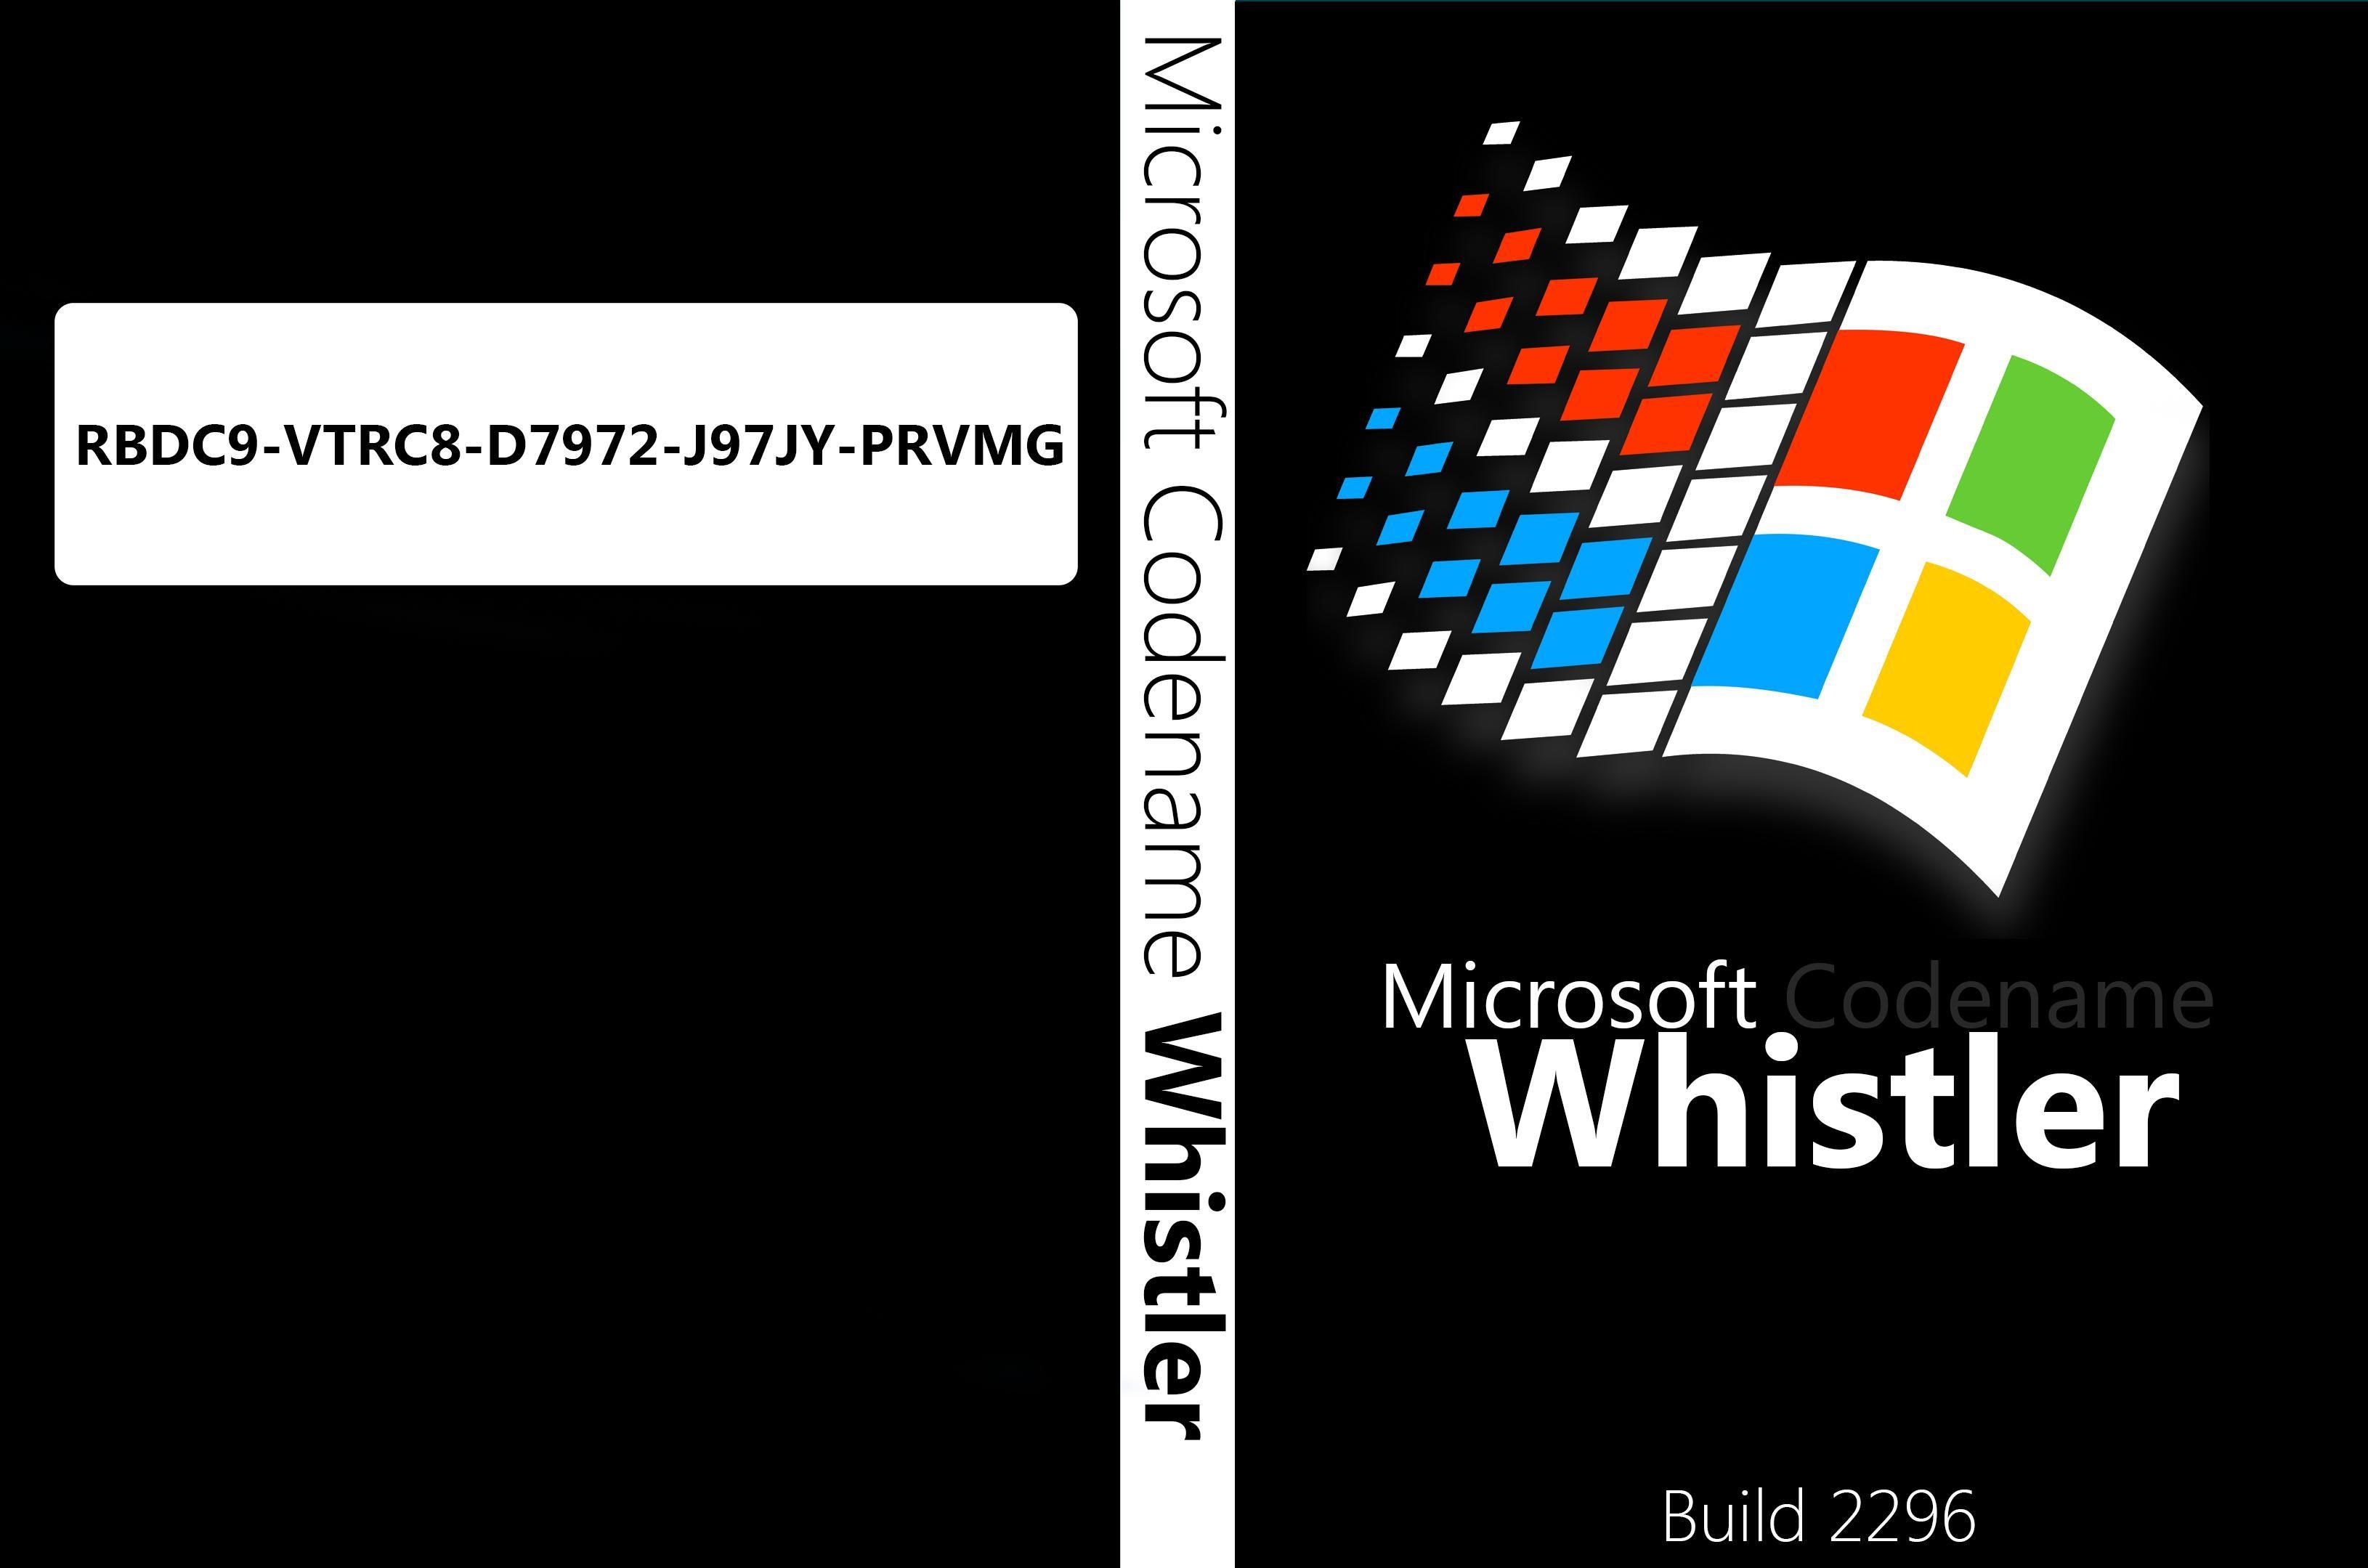 Windows Whistler Logo - View topic - Windows beta DVD covers - BetaArchive